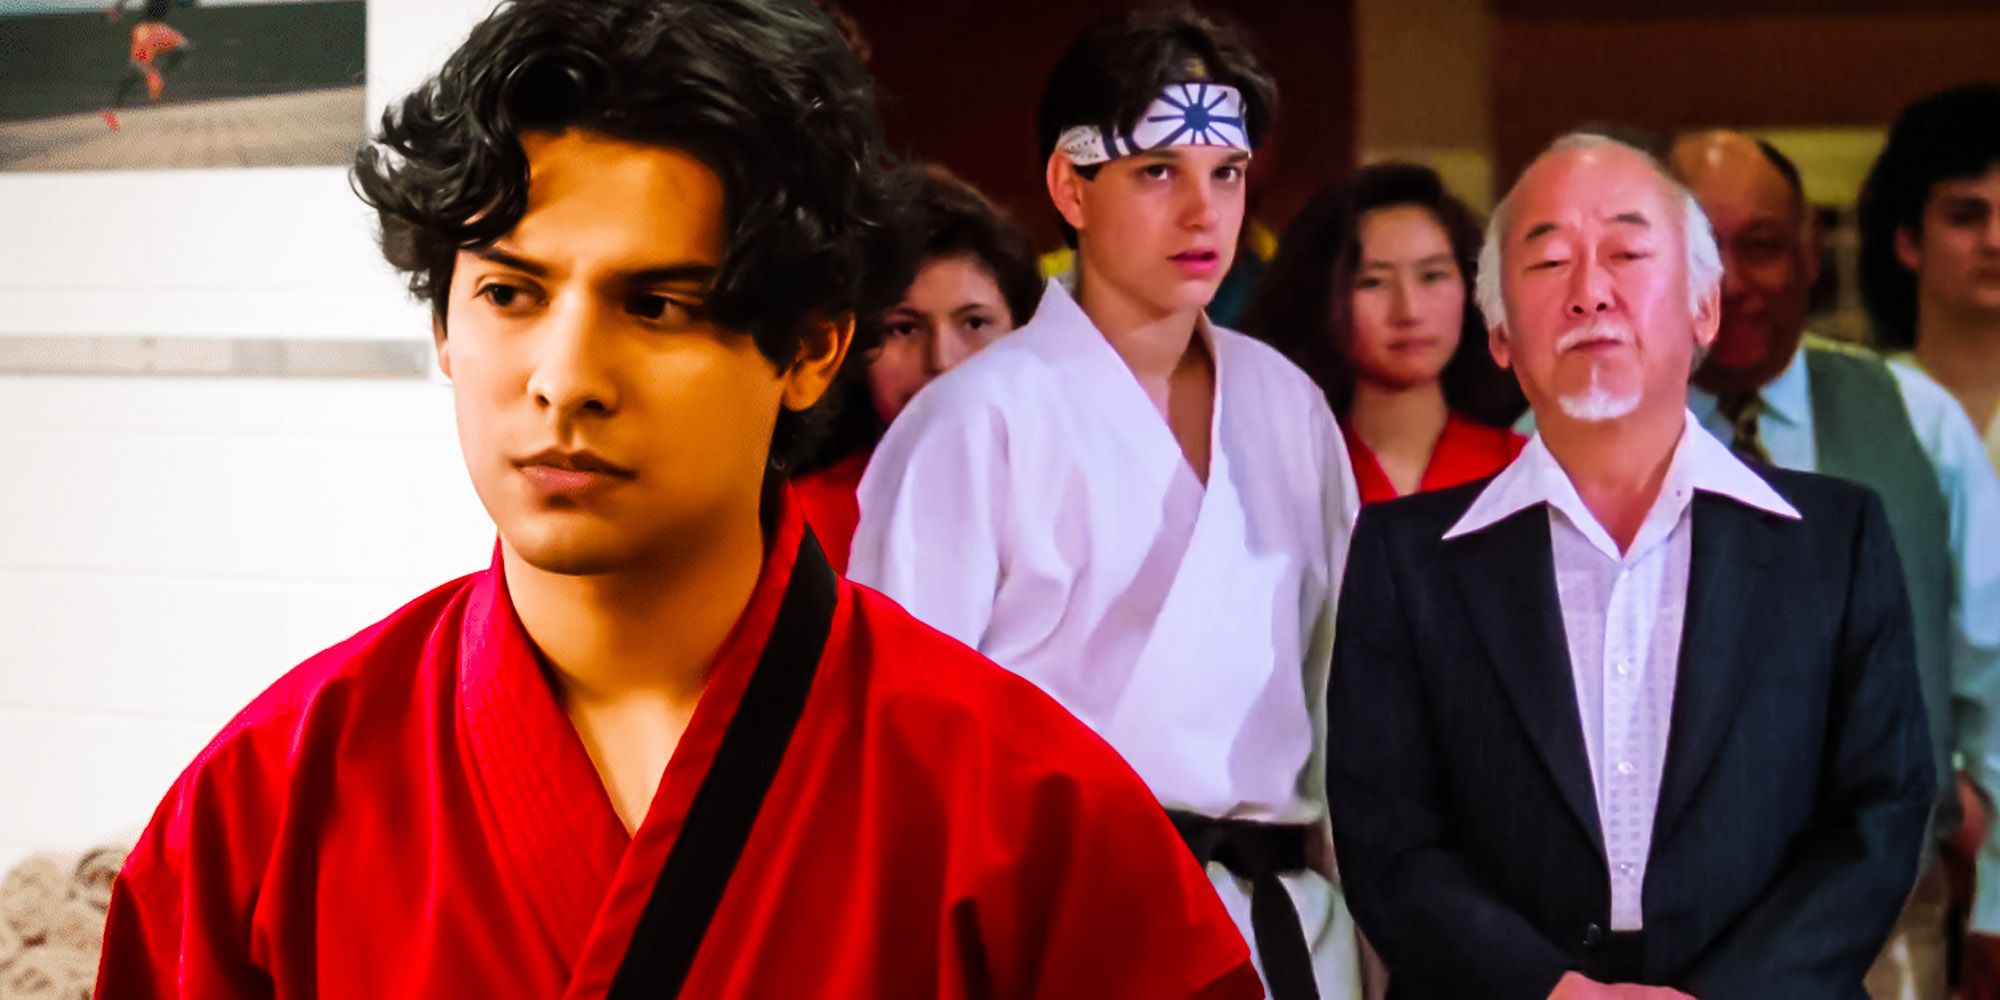 Cobra Kai Season 4's All Valley Changes rectifica el error de Karate Kid 3